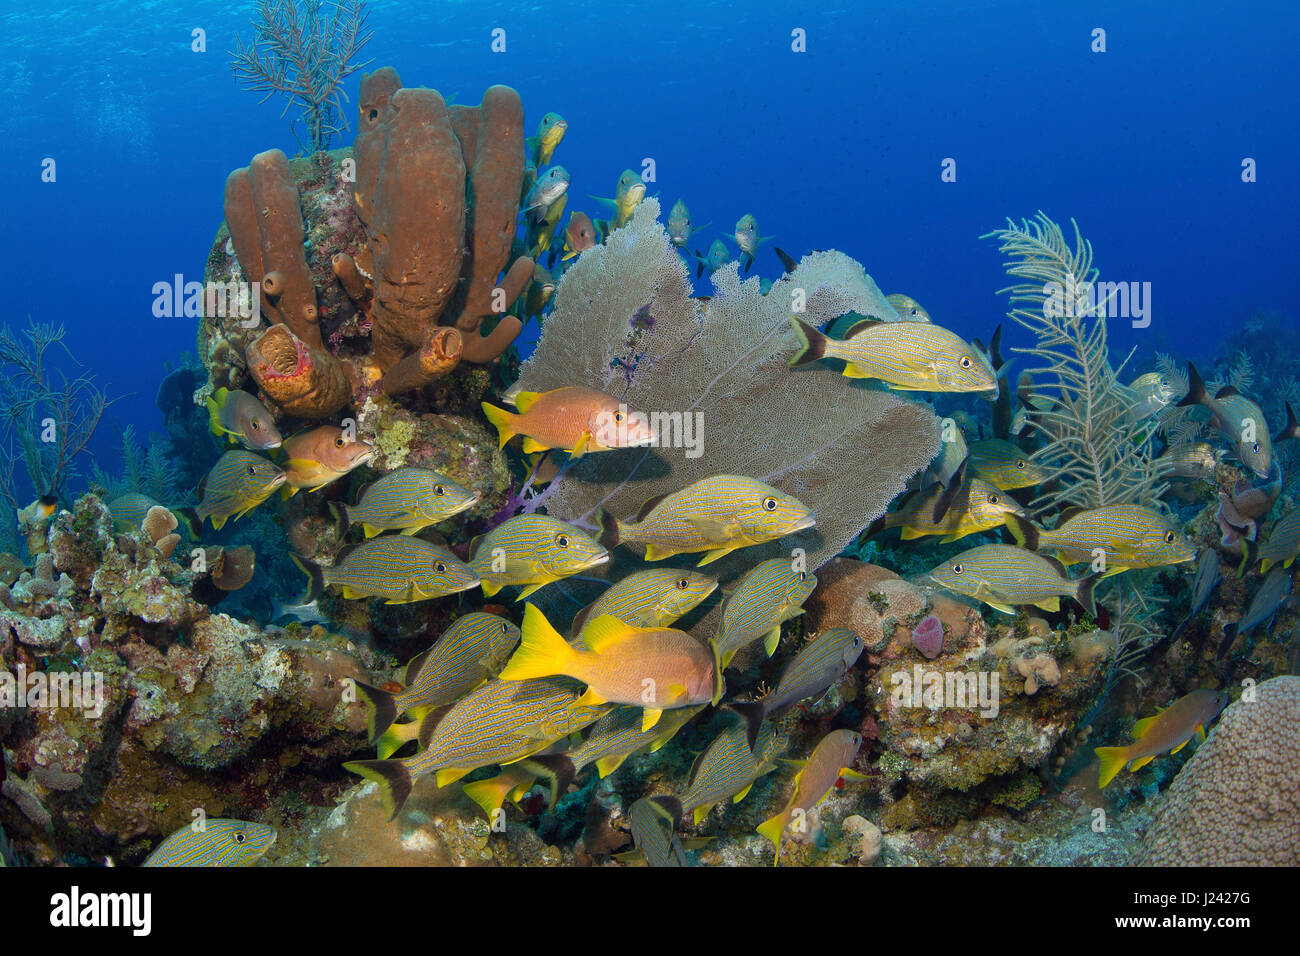 Reef scene with schooling fish, Cayman Brac Stock Photo